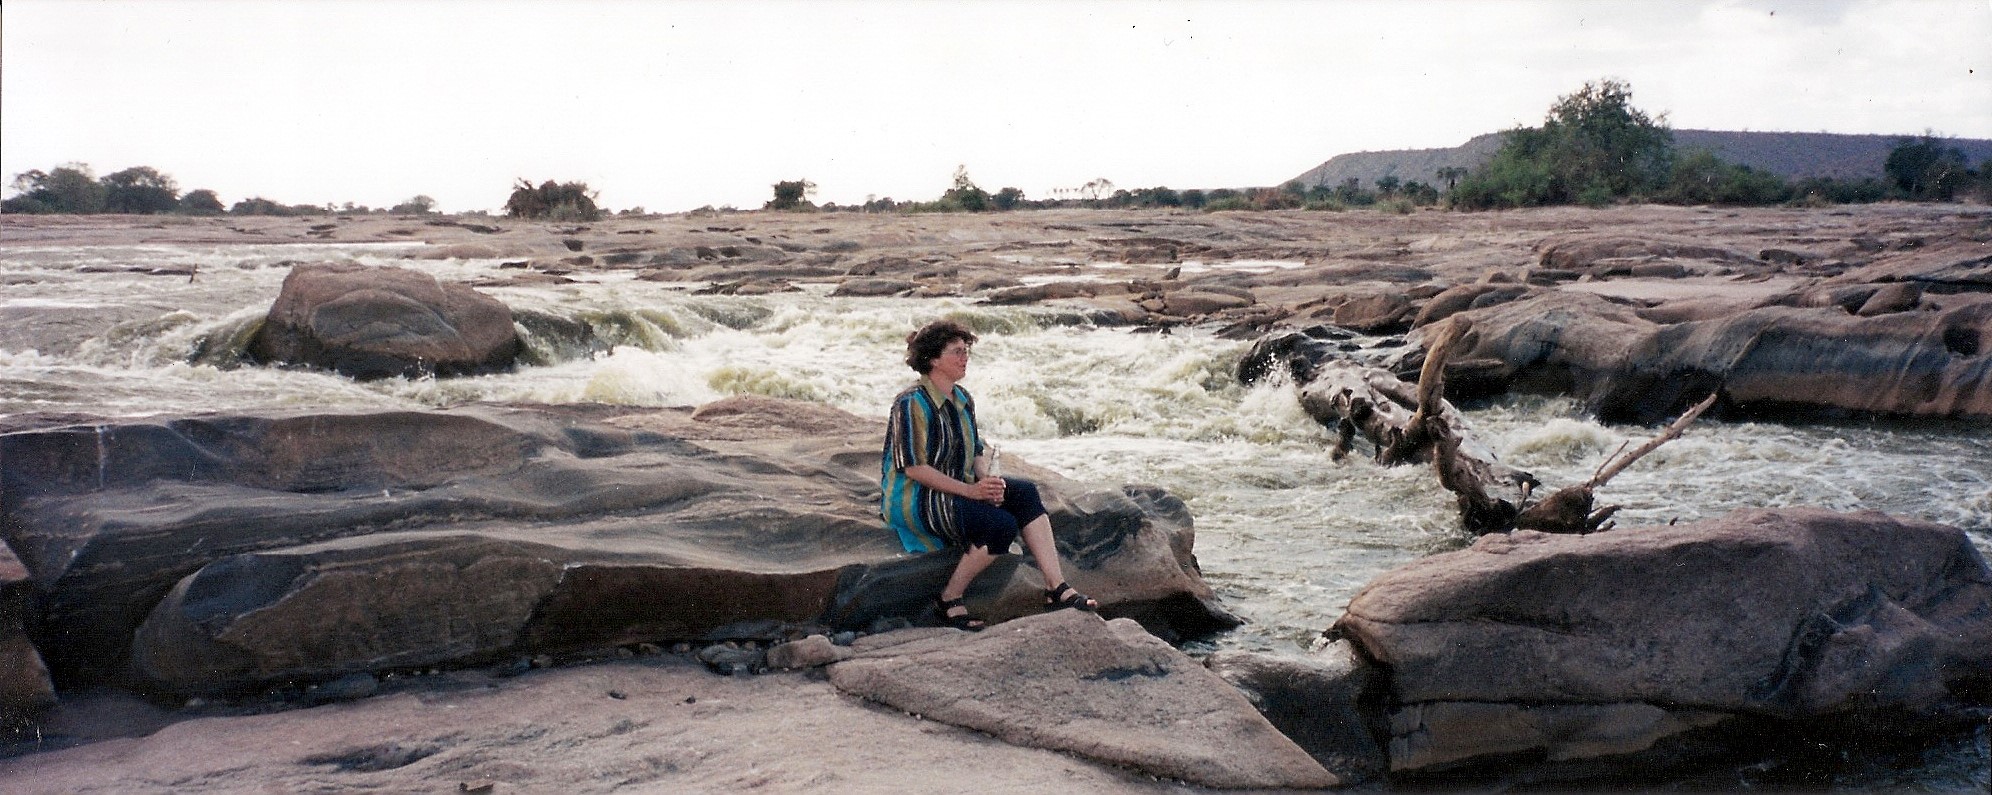 The Galana River in East Tsavo